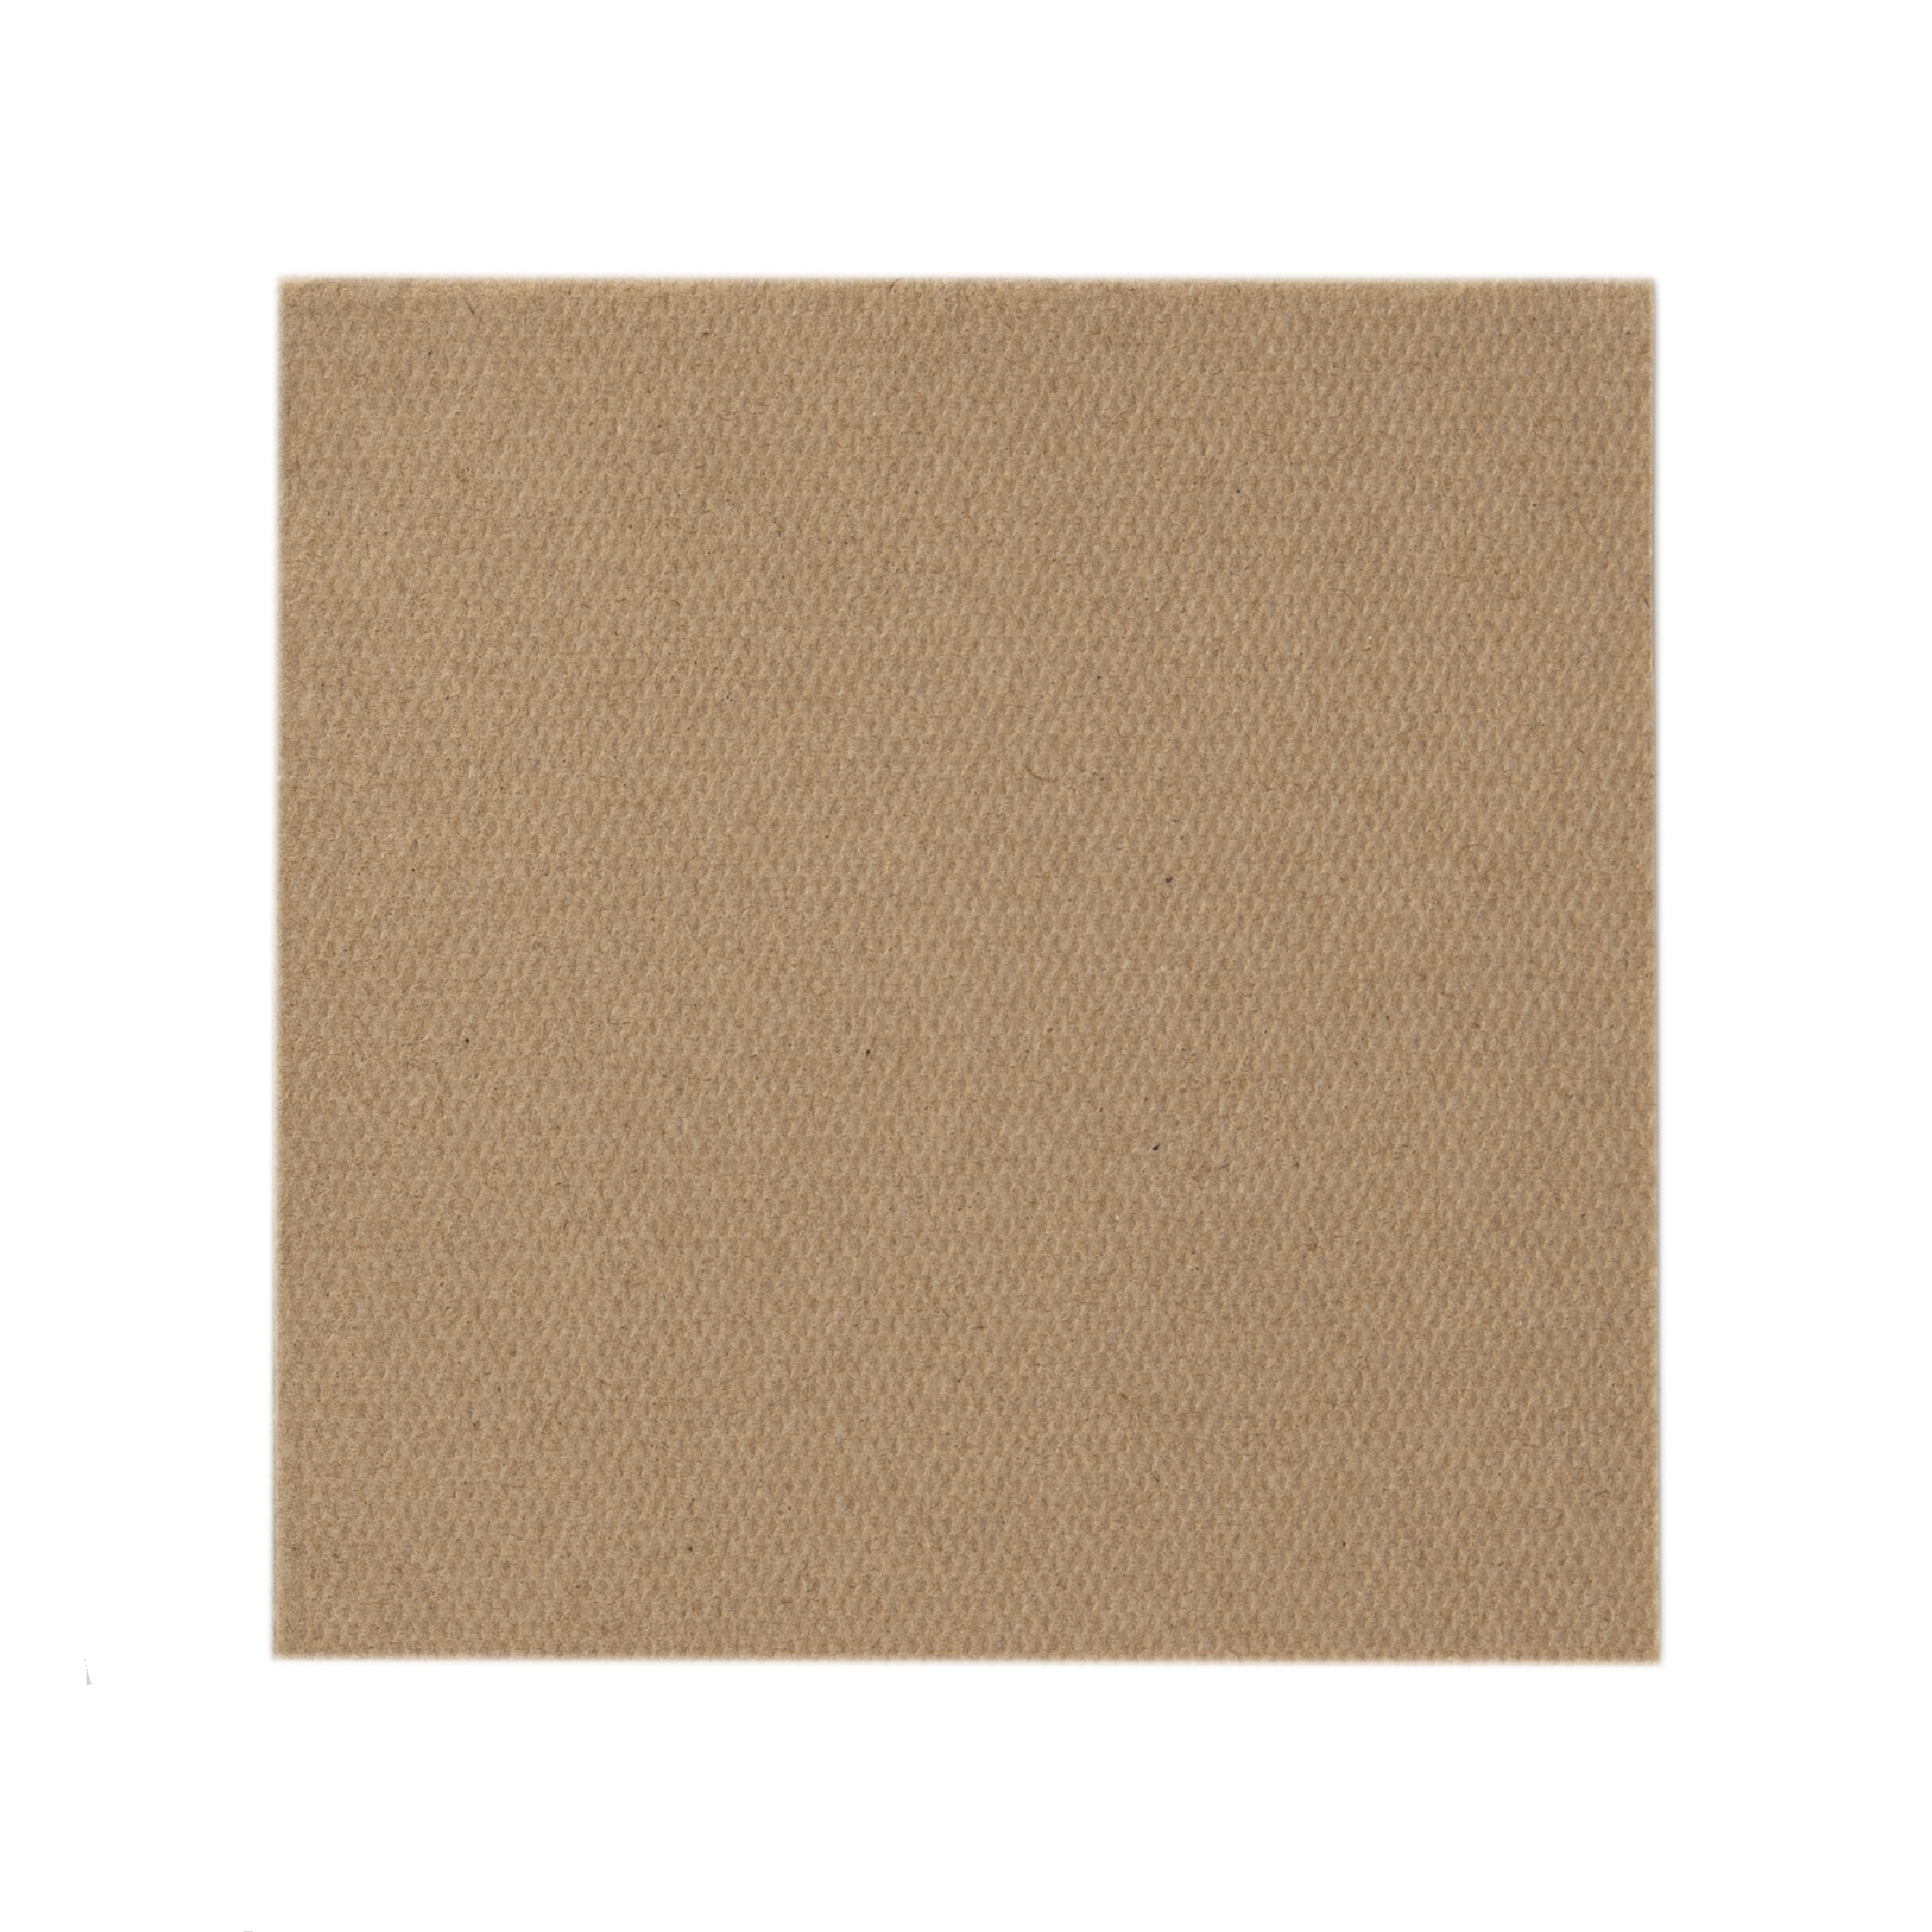 Mank Serviette Softpoint 1/4 Falz, 24 x 24 cm, Basic recycled braun